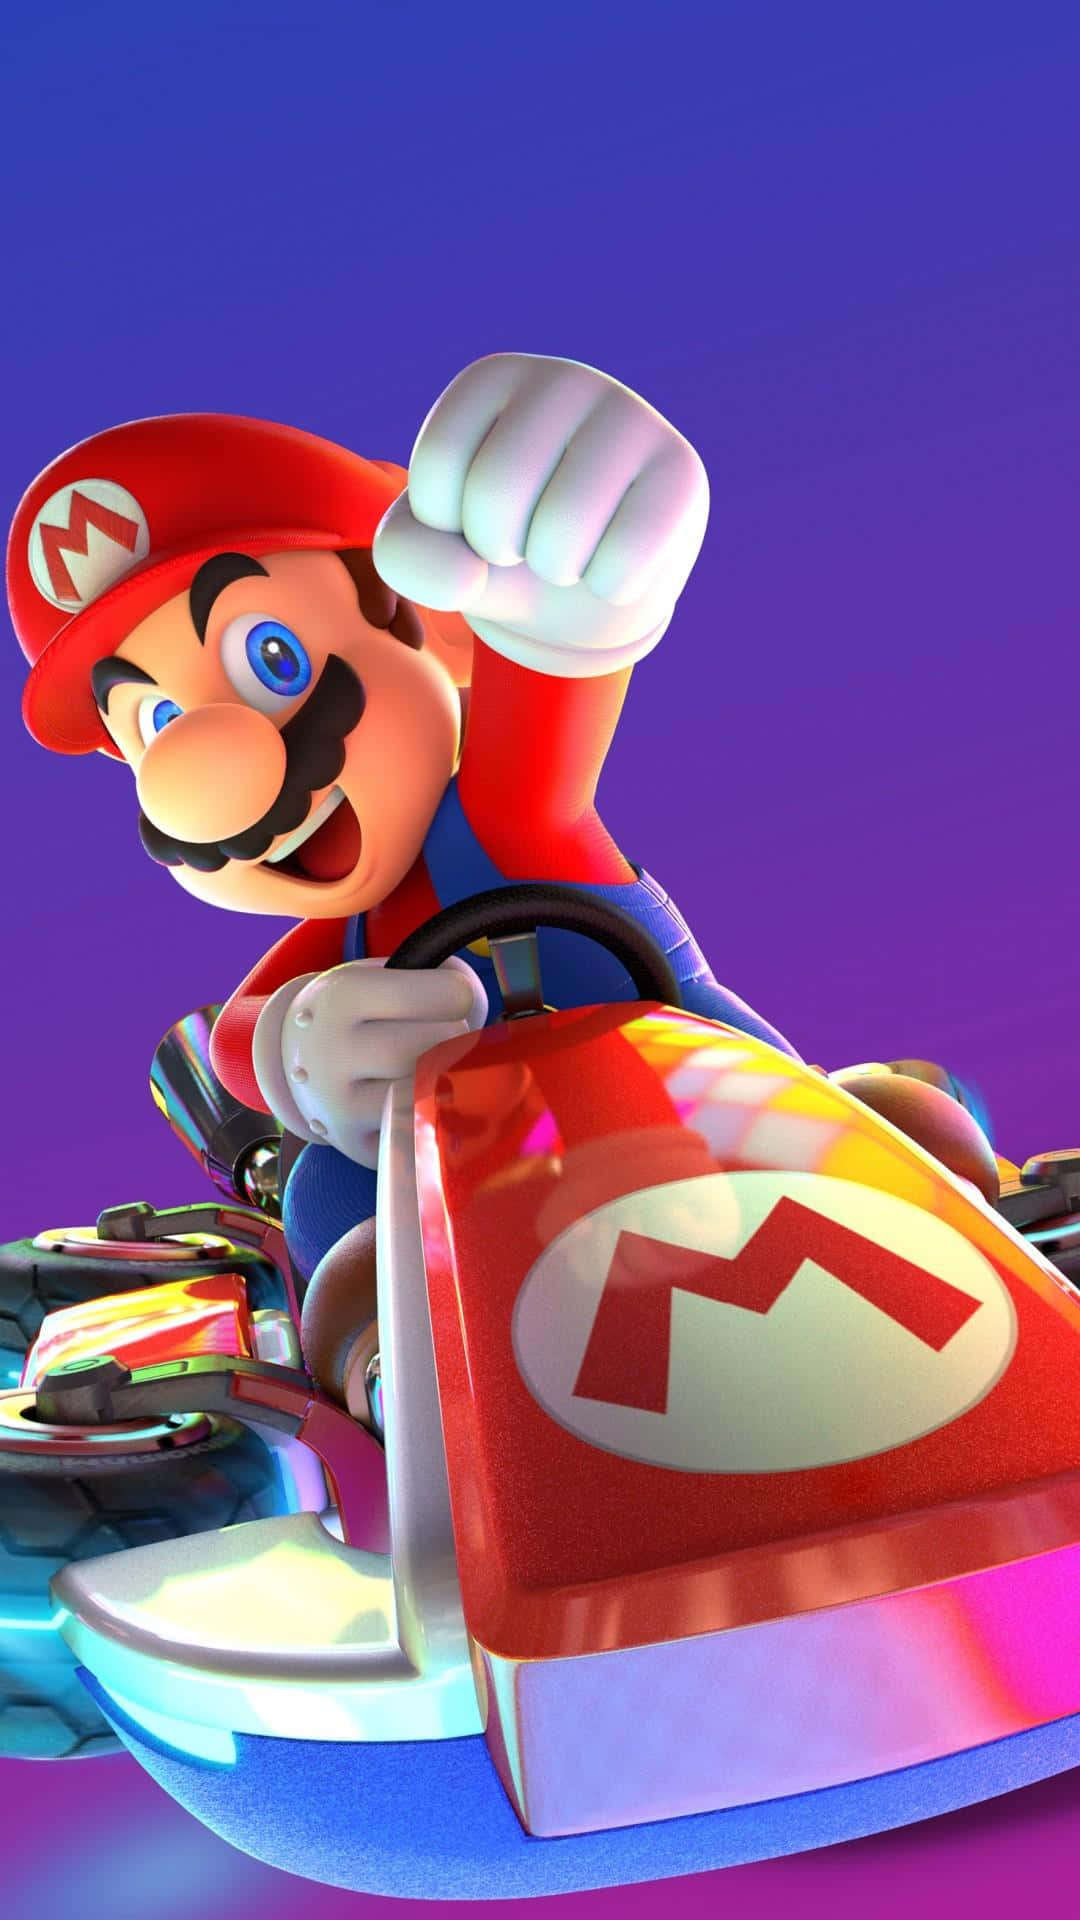 The iconic Mario of Super Mario Bros. fame Wallpaper